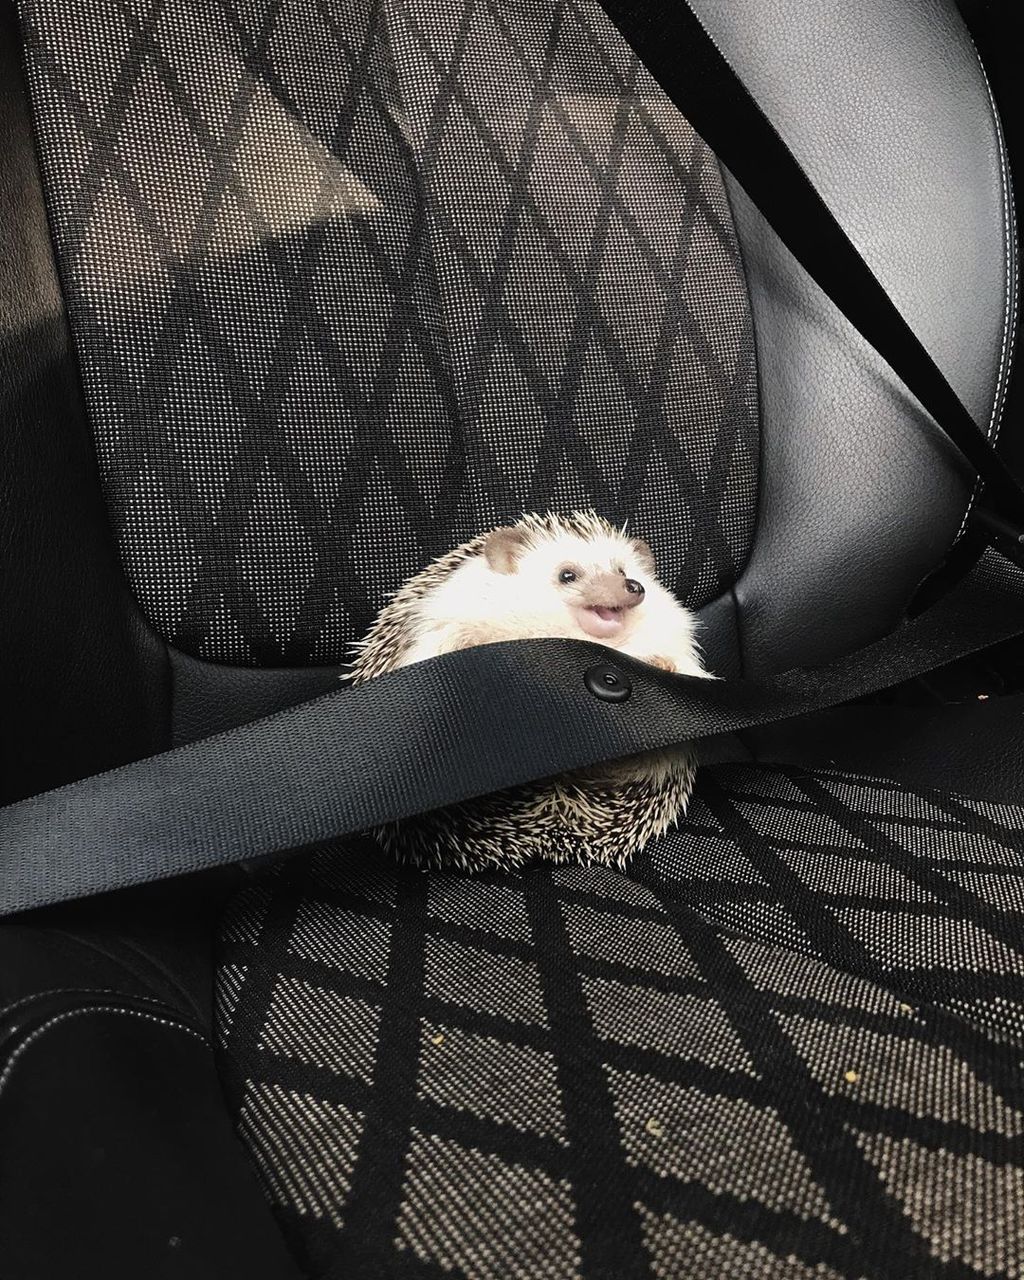 Forrás: Instagram/rick_the_hedgehog 